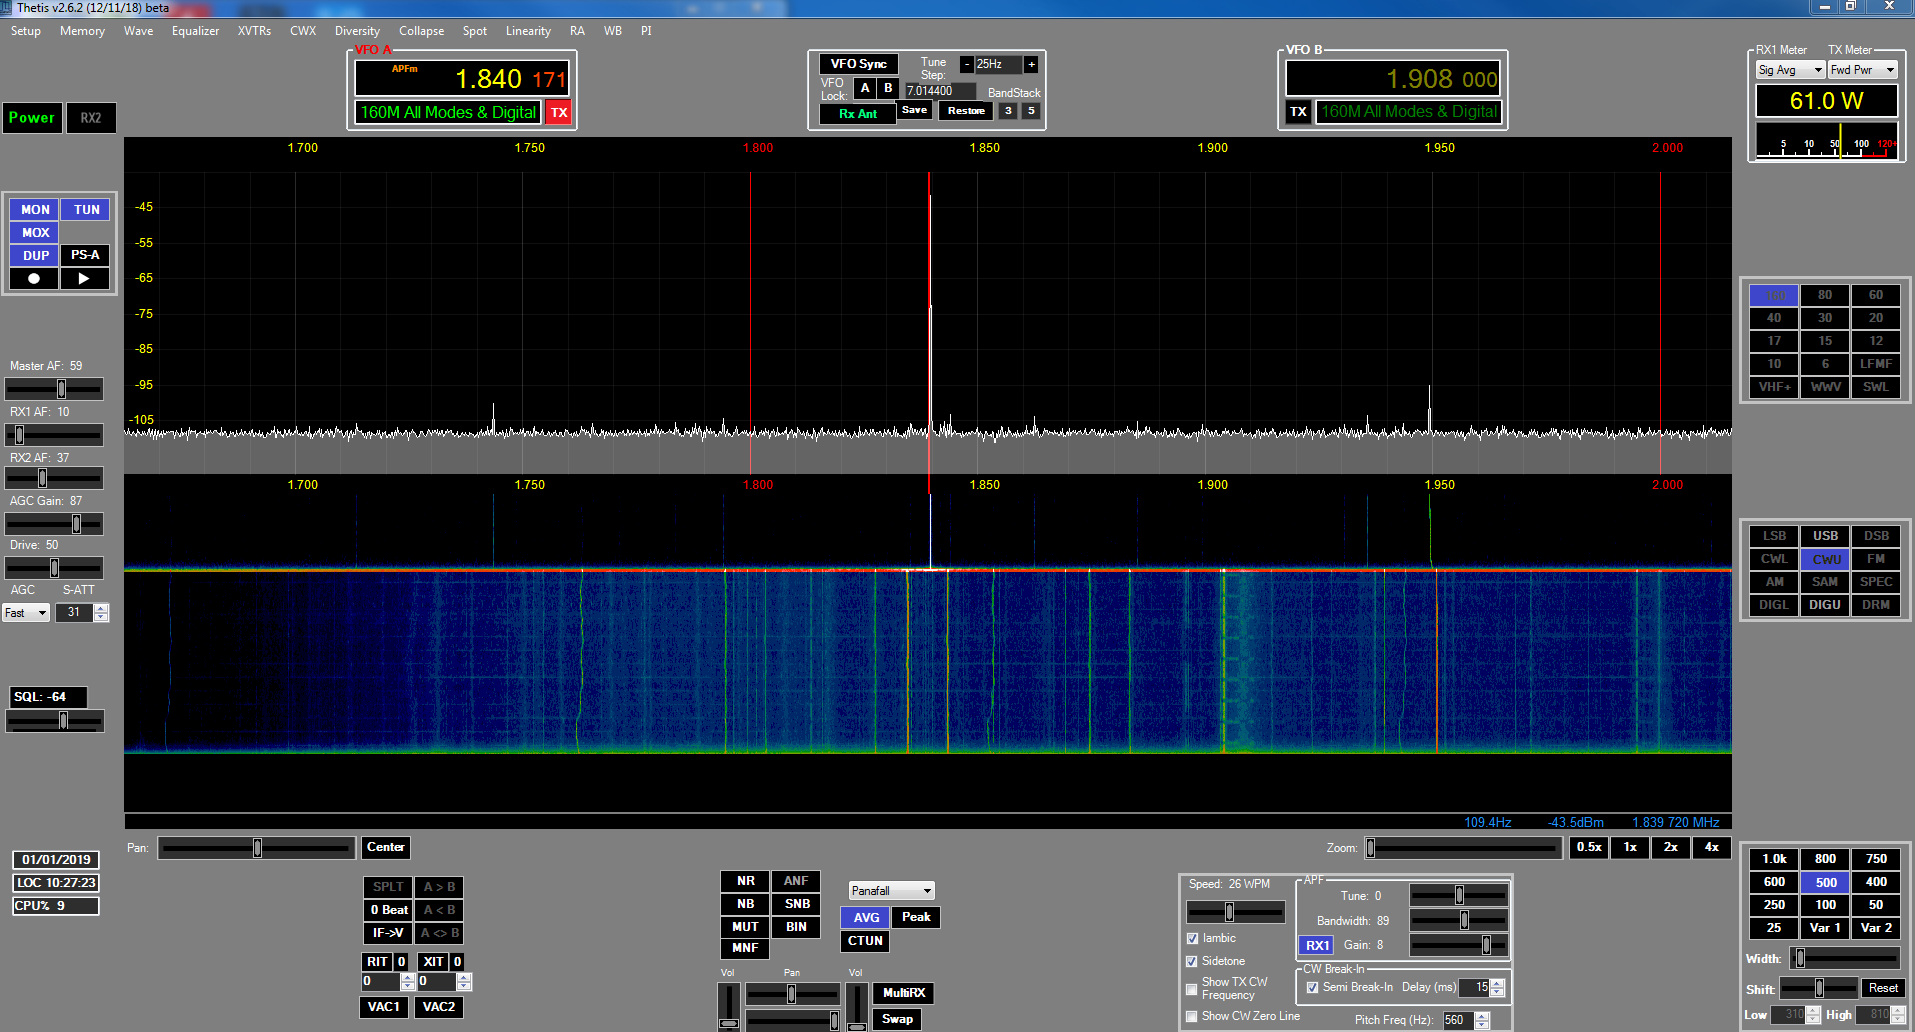 P2 1.5 Thetis 2.6.2 160m TX spectrum.PNG